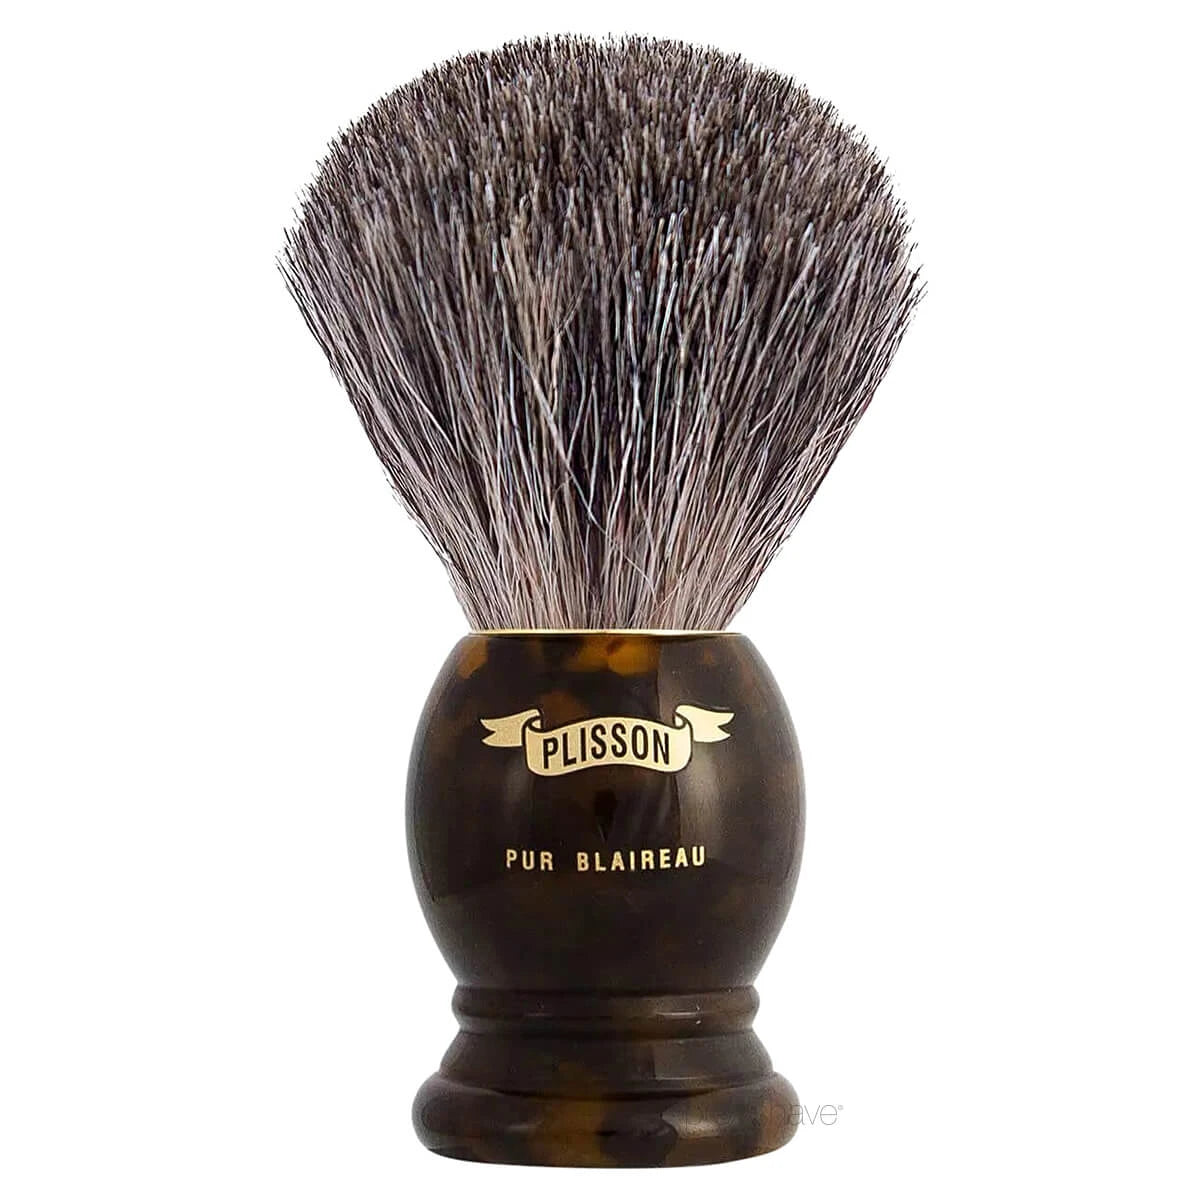 Plisson Shaving Brush, Russian Grey Badger & Imit. Tortoiseshell- Size 12